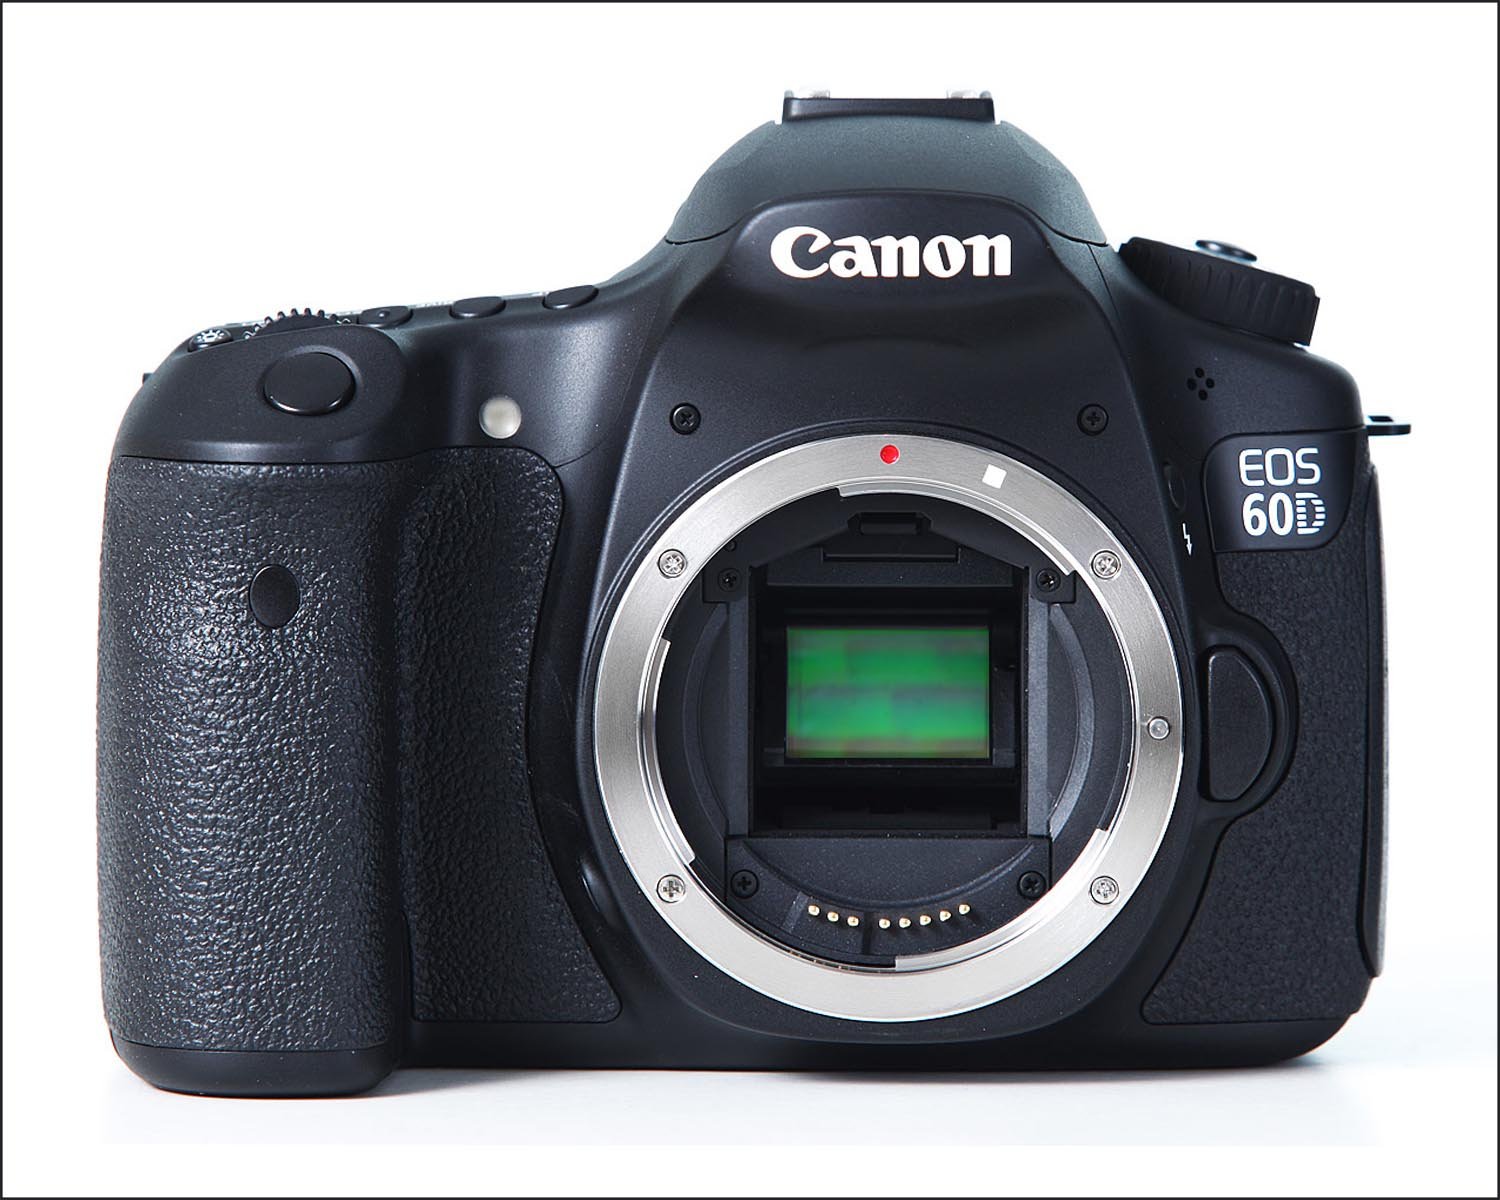 Canon camera showing APS-C sensor